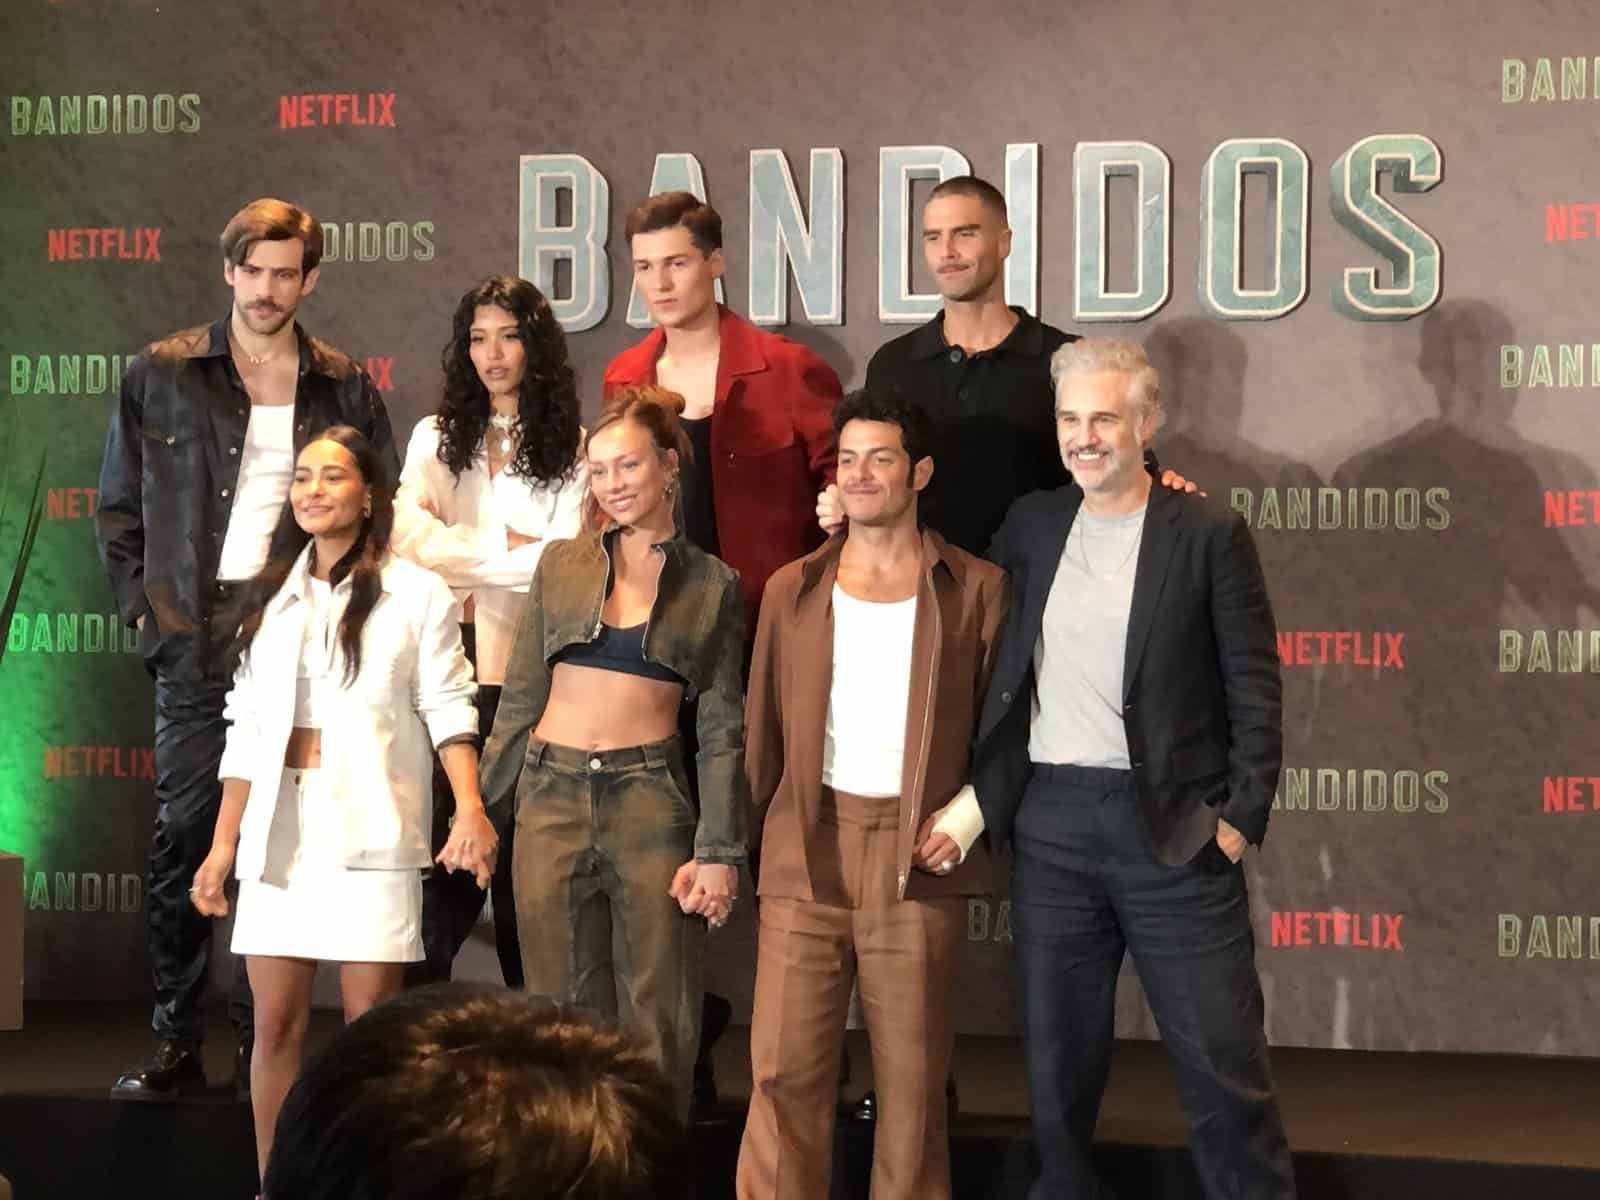 Bandidos cast